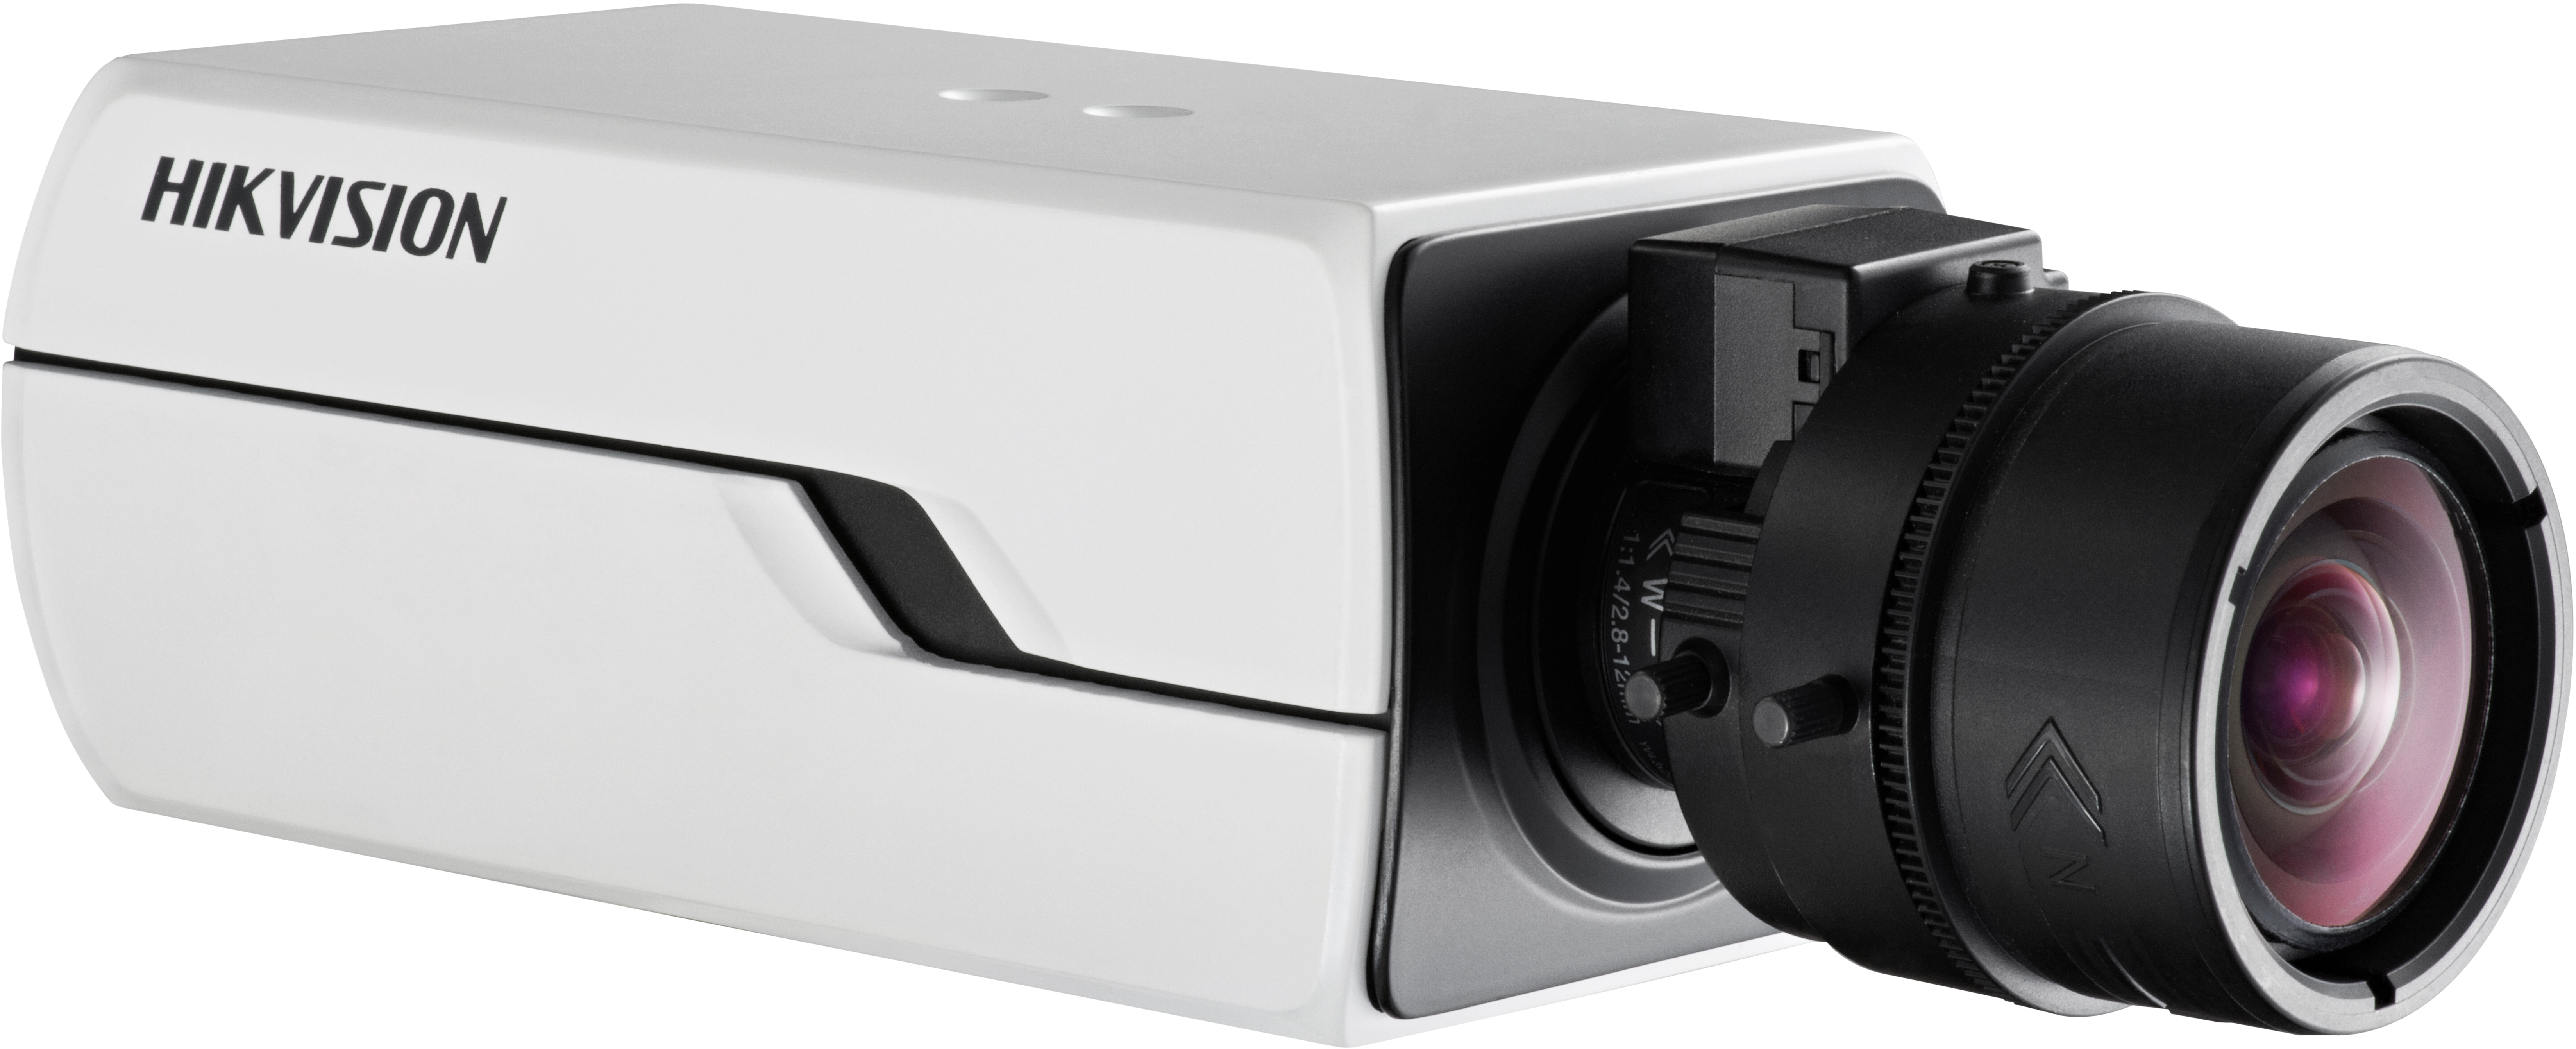 A White And Black Camera